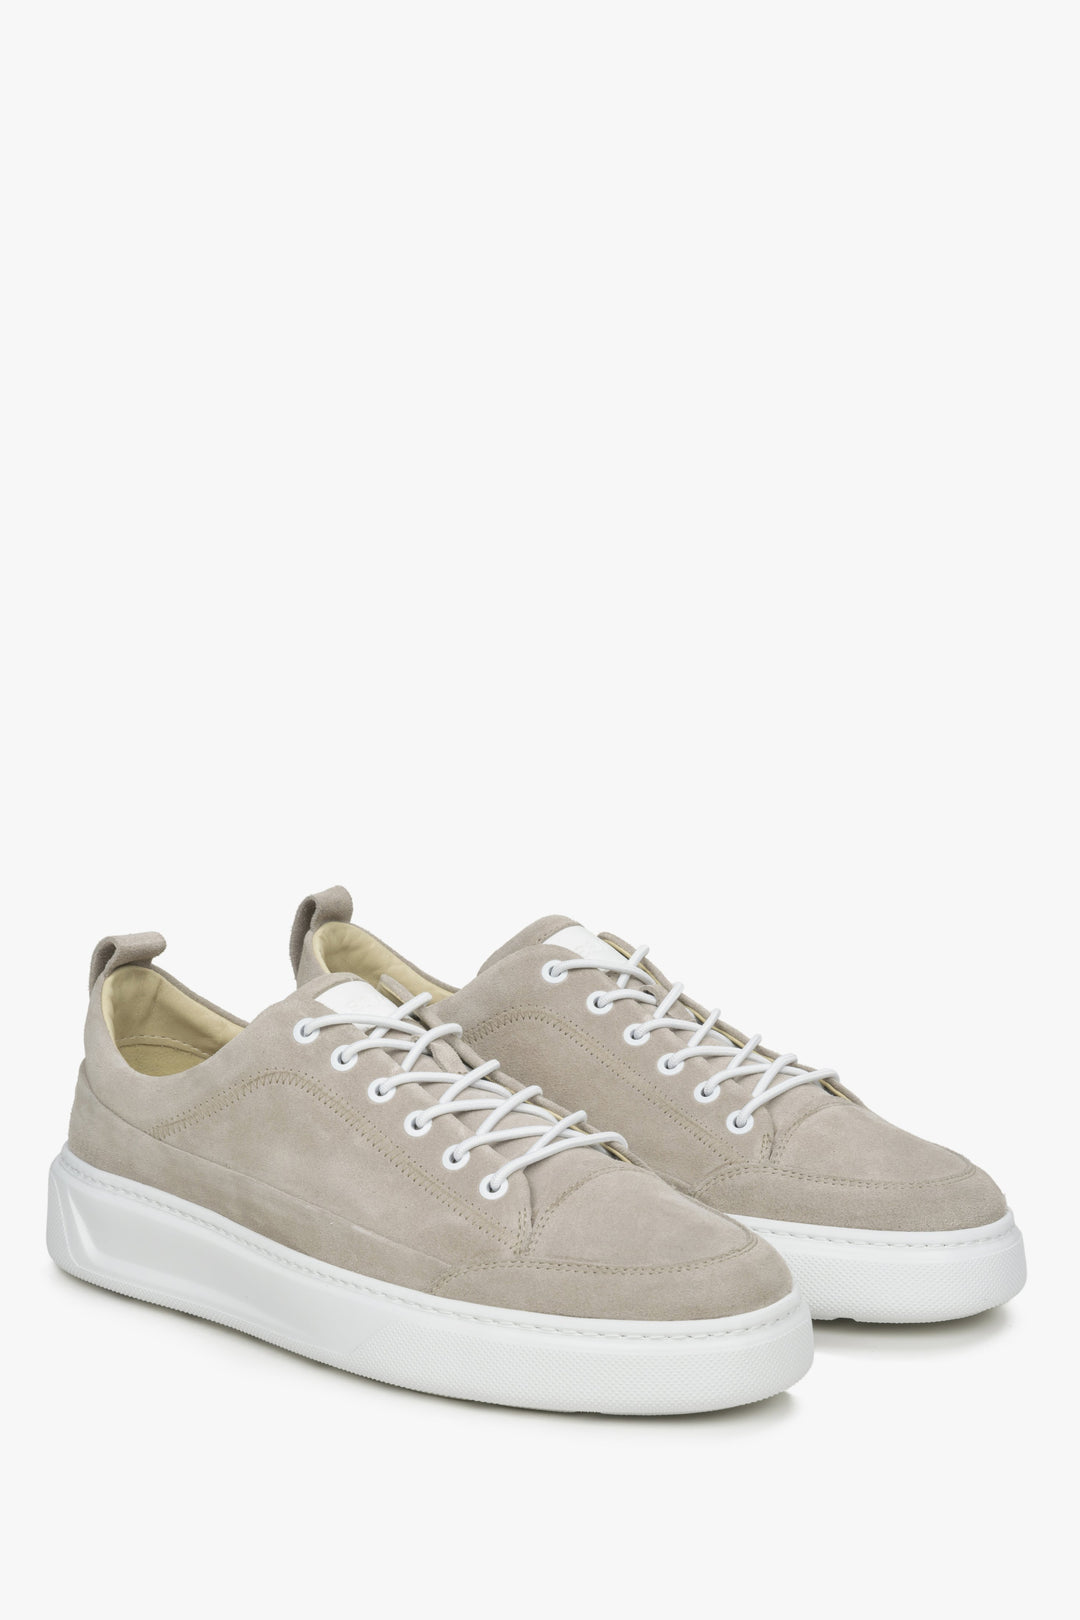 Estro men's velour sneakers in grey colour.